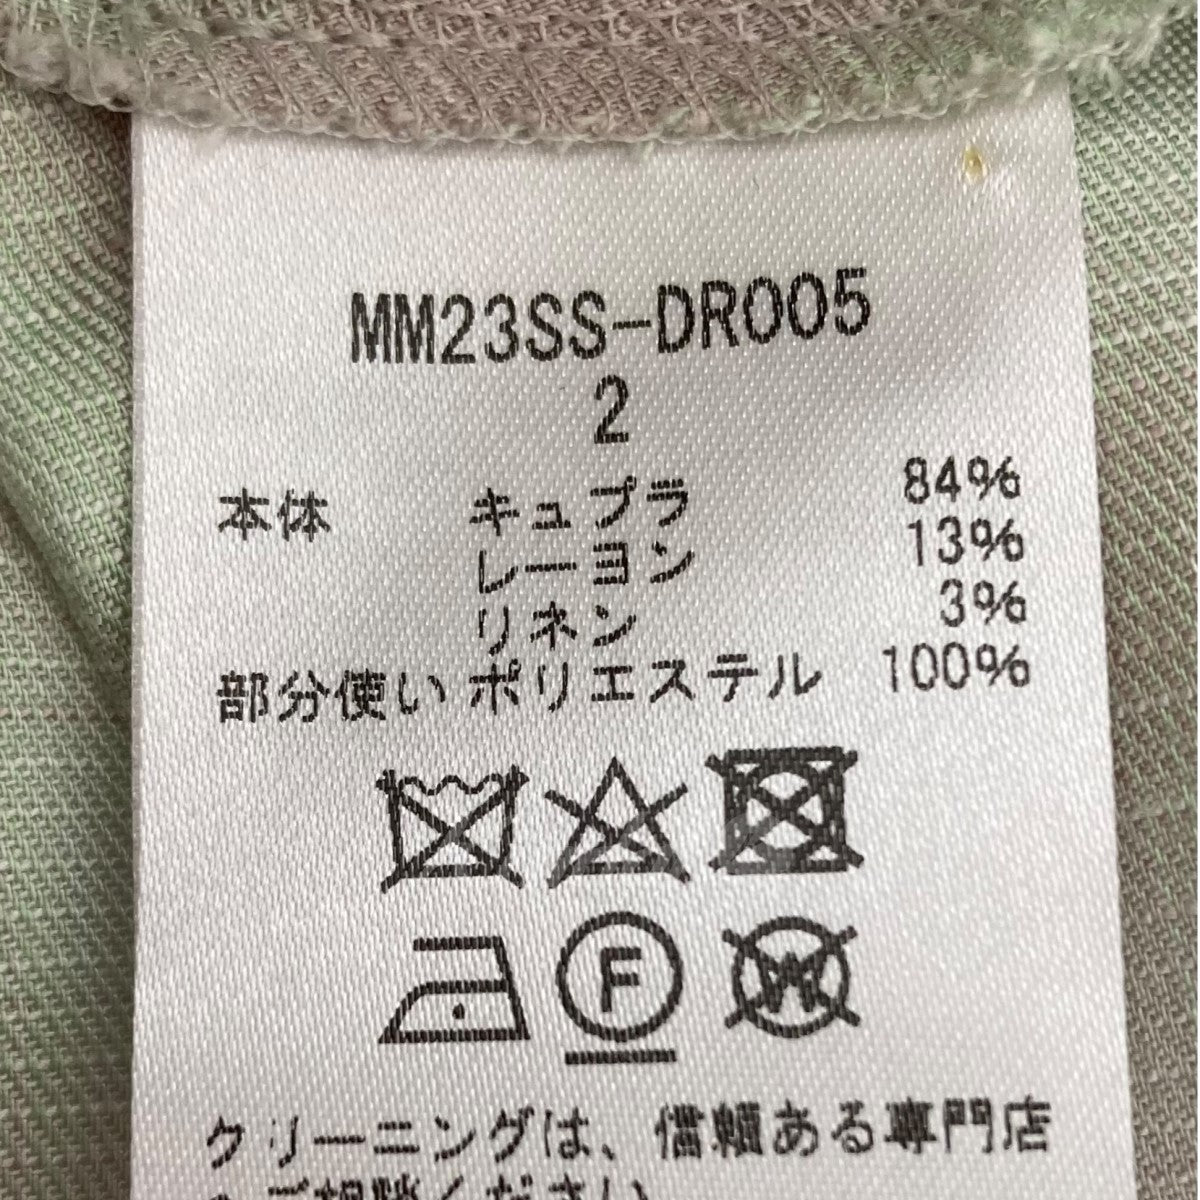 mame kurogouchi(マメ クロゴウチ) 「Linen Mix Ombre Check Flared Dress」ワンピース  MM23SS-DR005 グリーン サイズ 14｜【公式】カインドオルオンライン ブランド古着・中古通販【kindal】